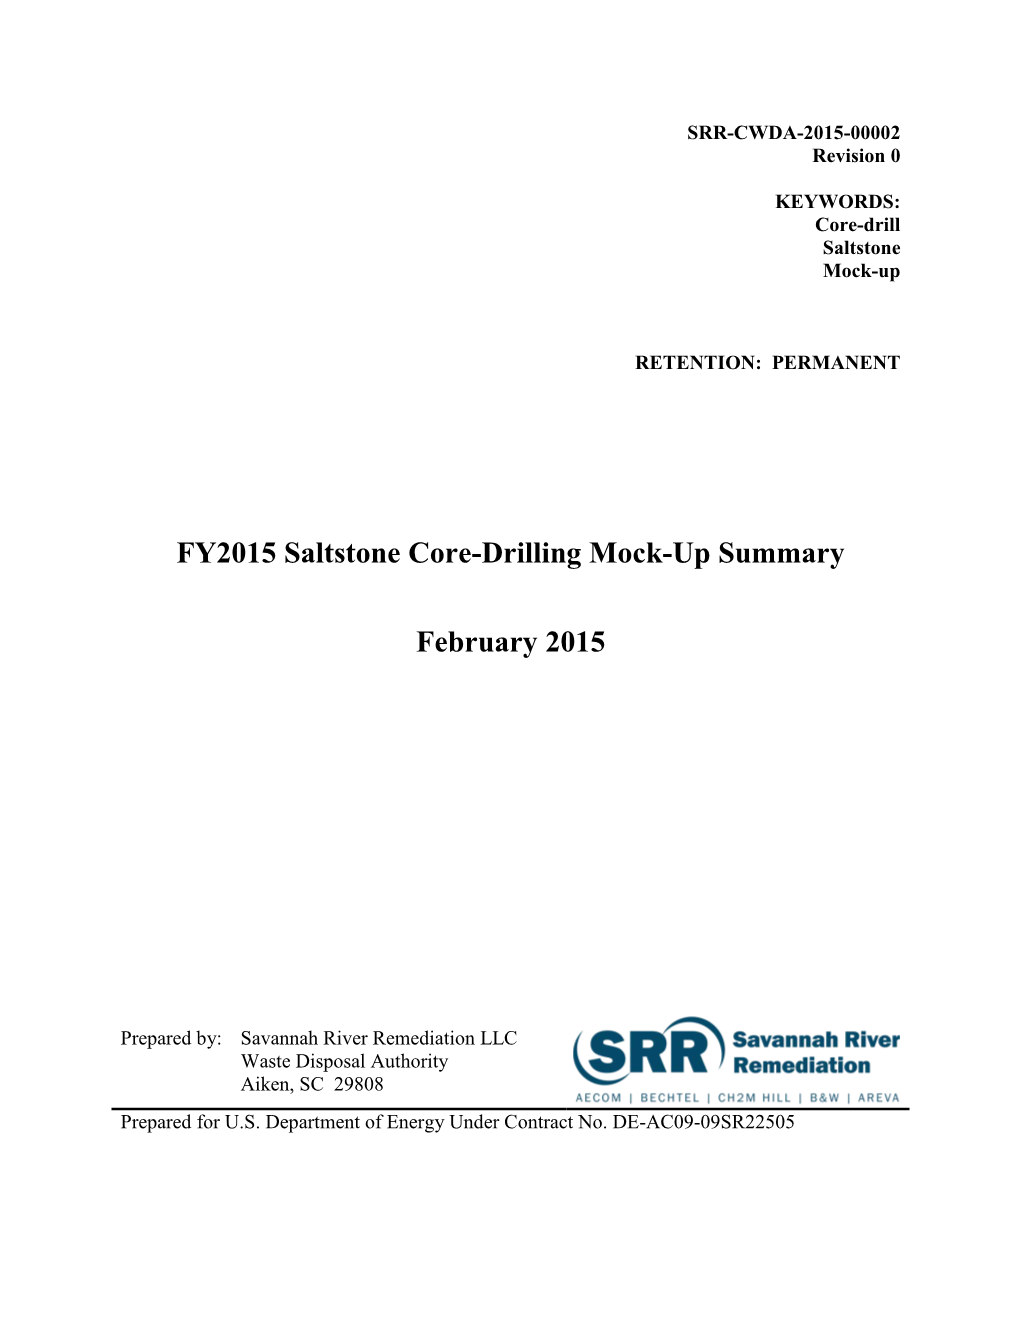 "FY2015 Saltstone Core-Drilling Mock-Up Summary"